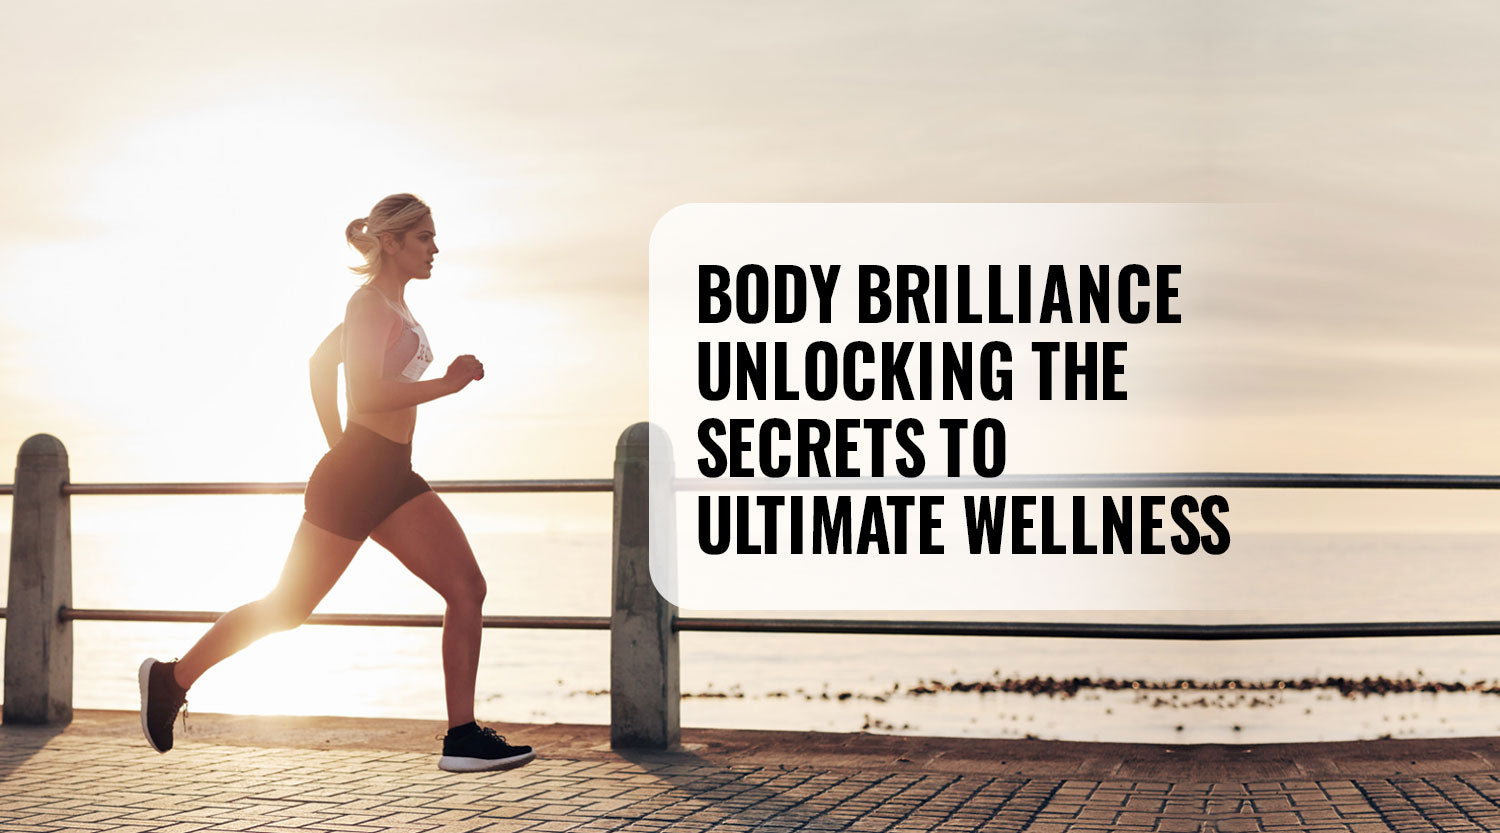 Body brilliance - Unlocking the secrets to ultimate wellness